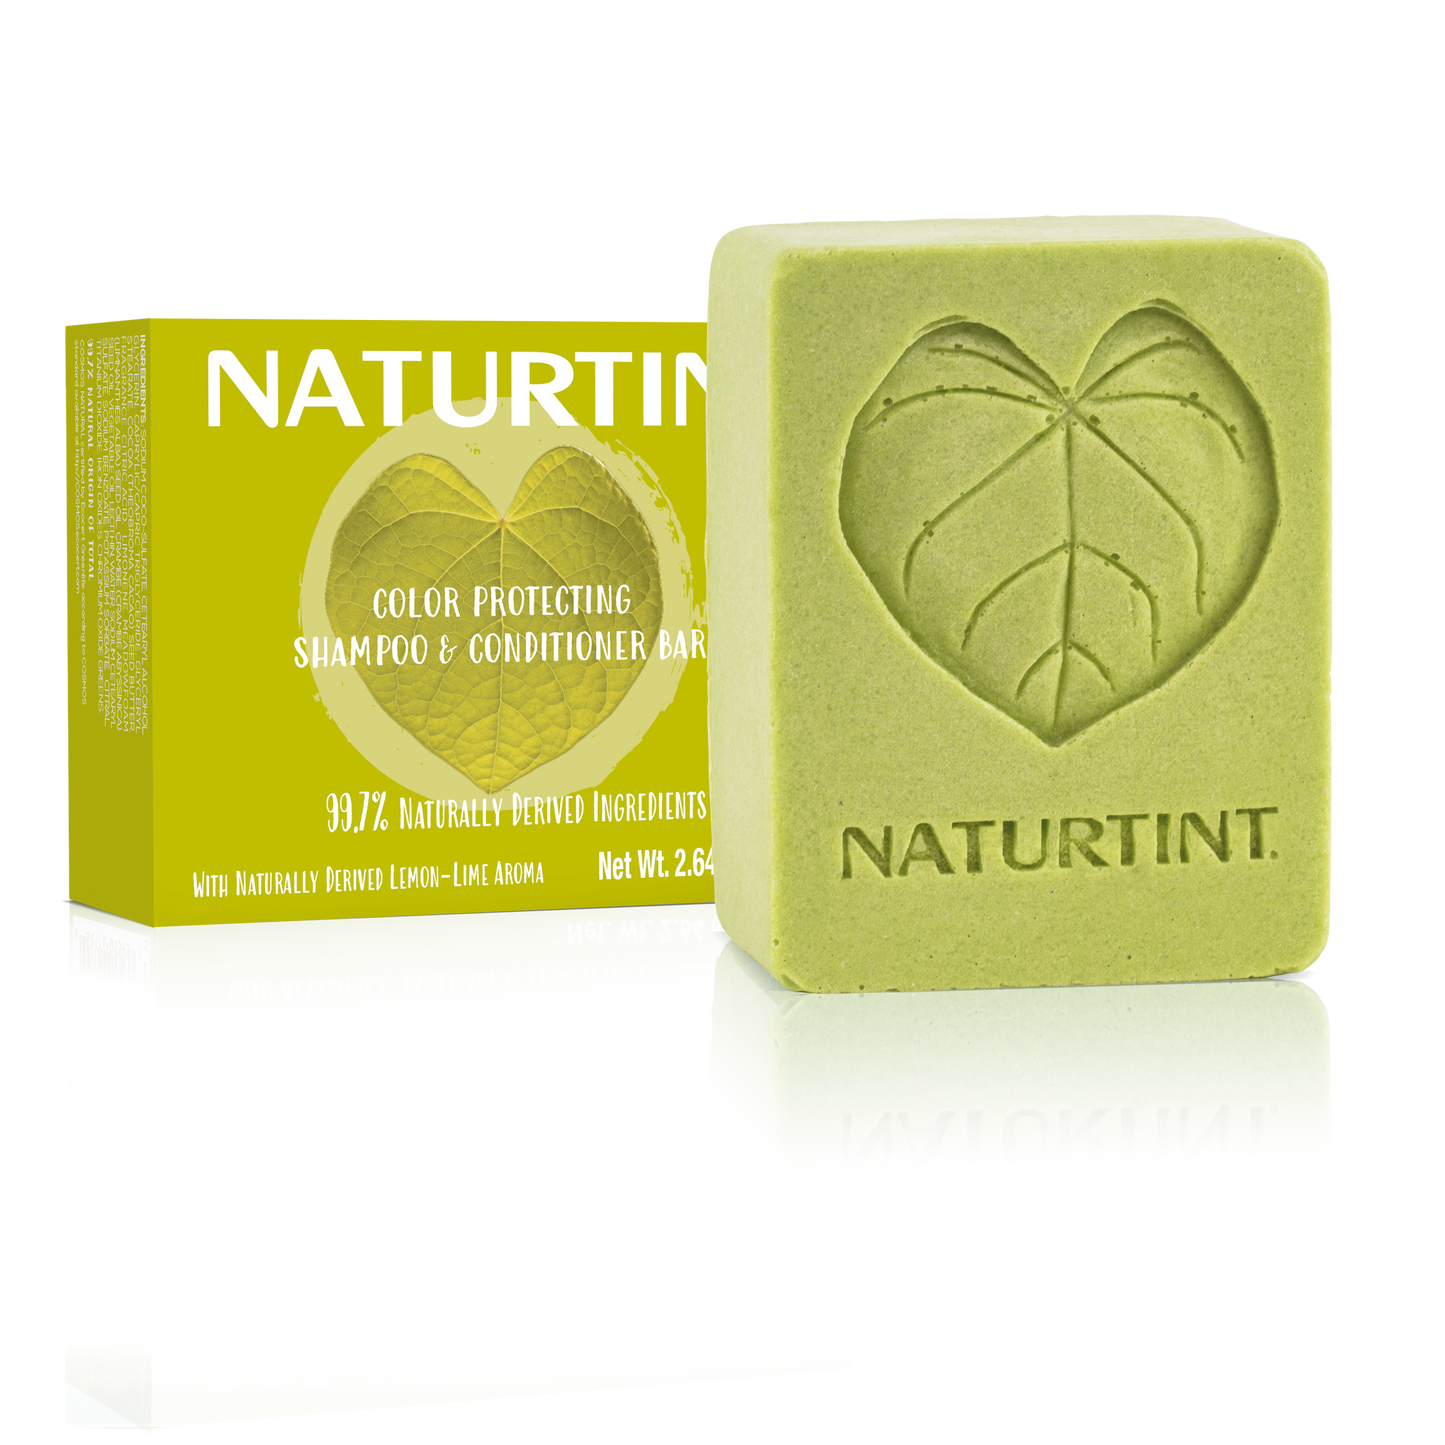 Naturtint Shampoo & Conditioner Bar - Color Protecting Lemon Lime